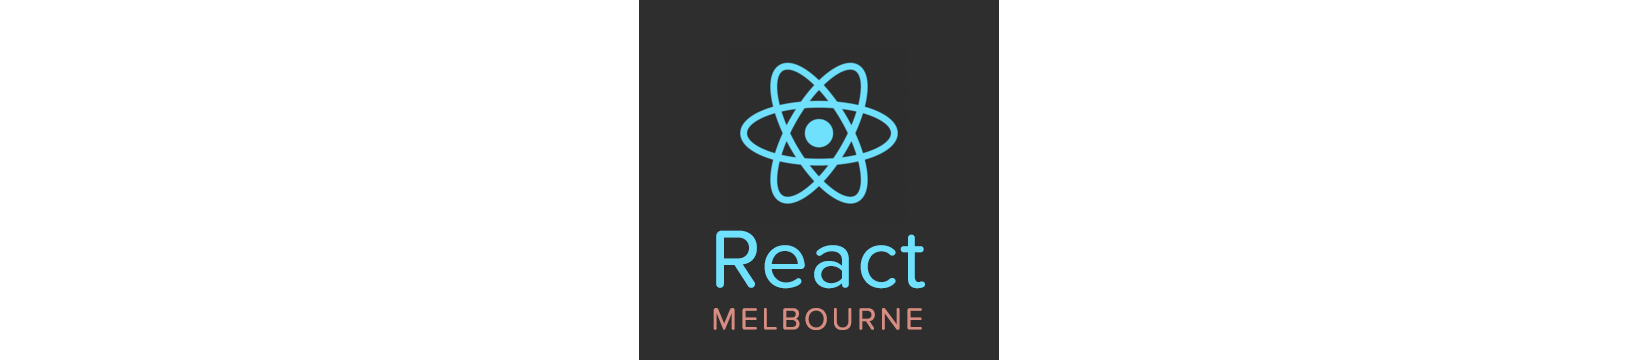 React Melburne logo